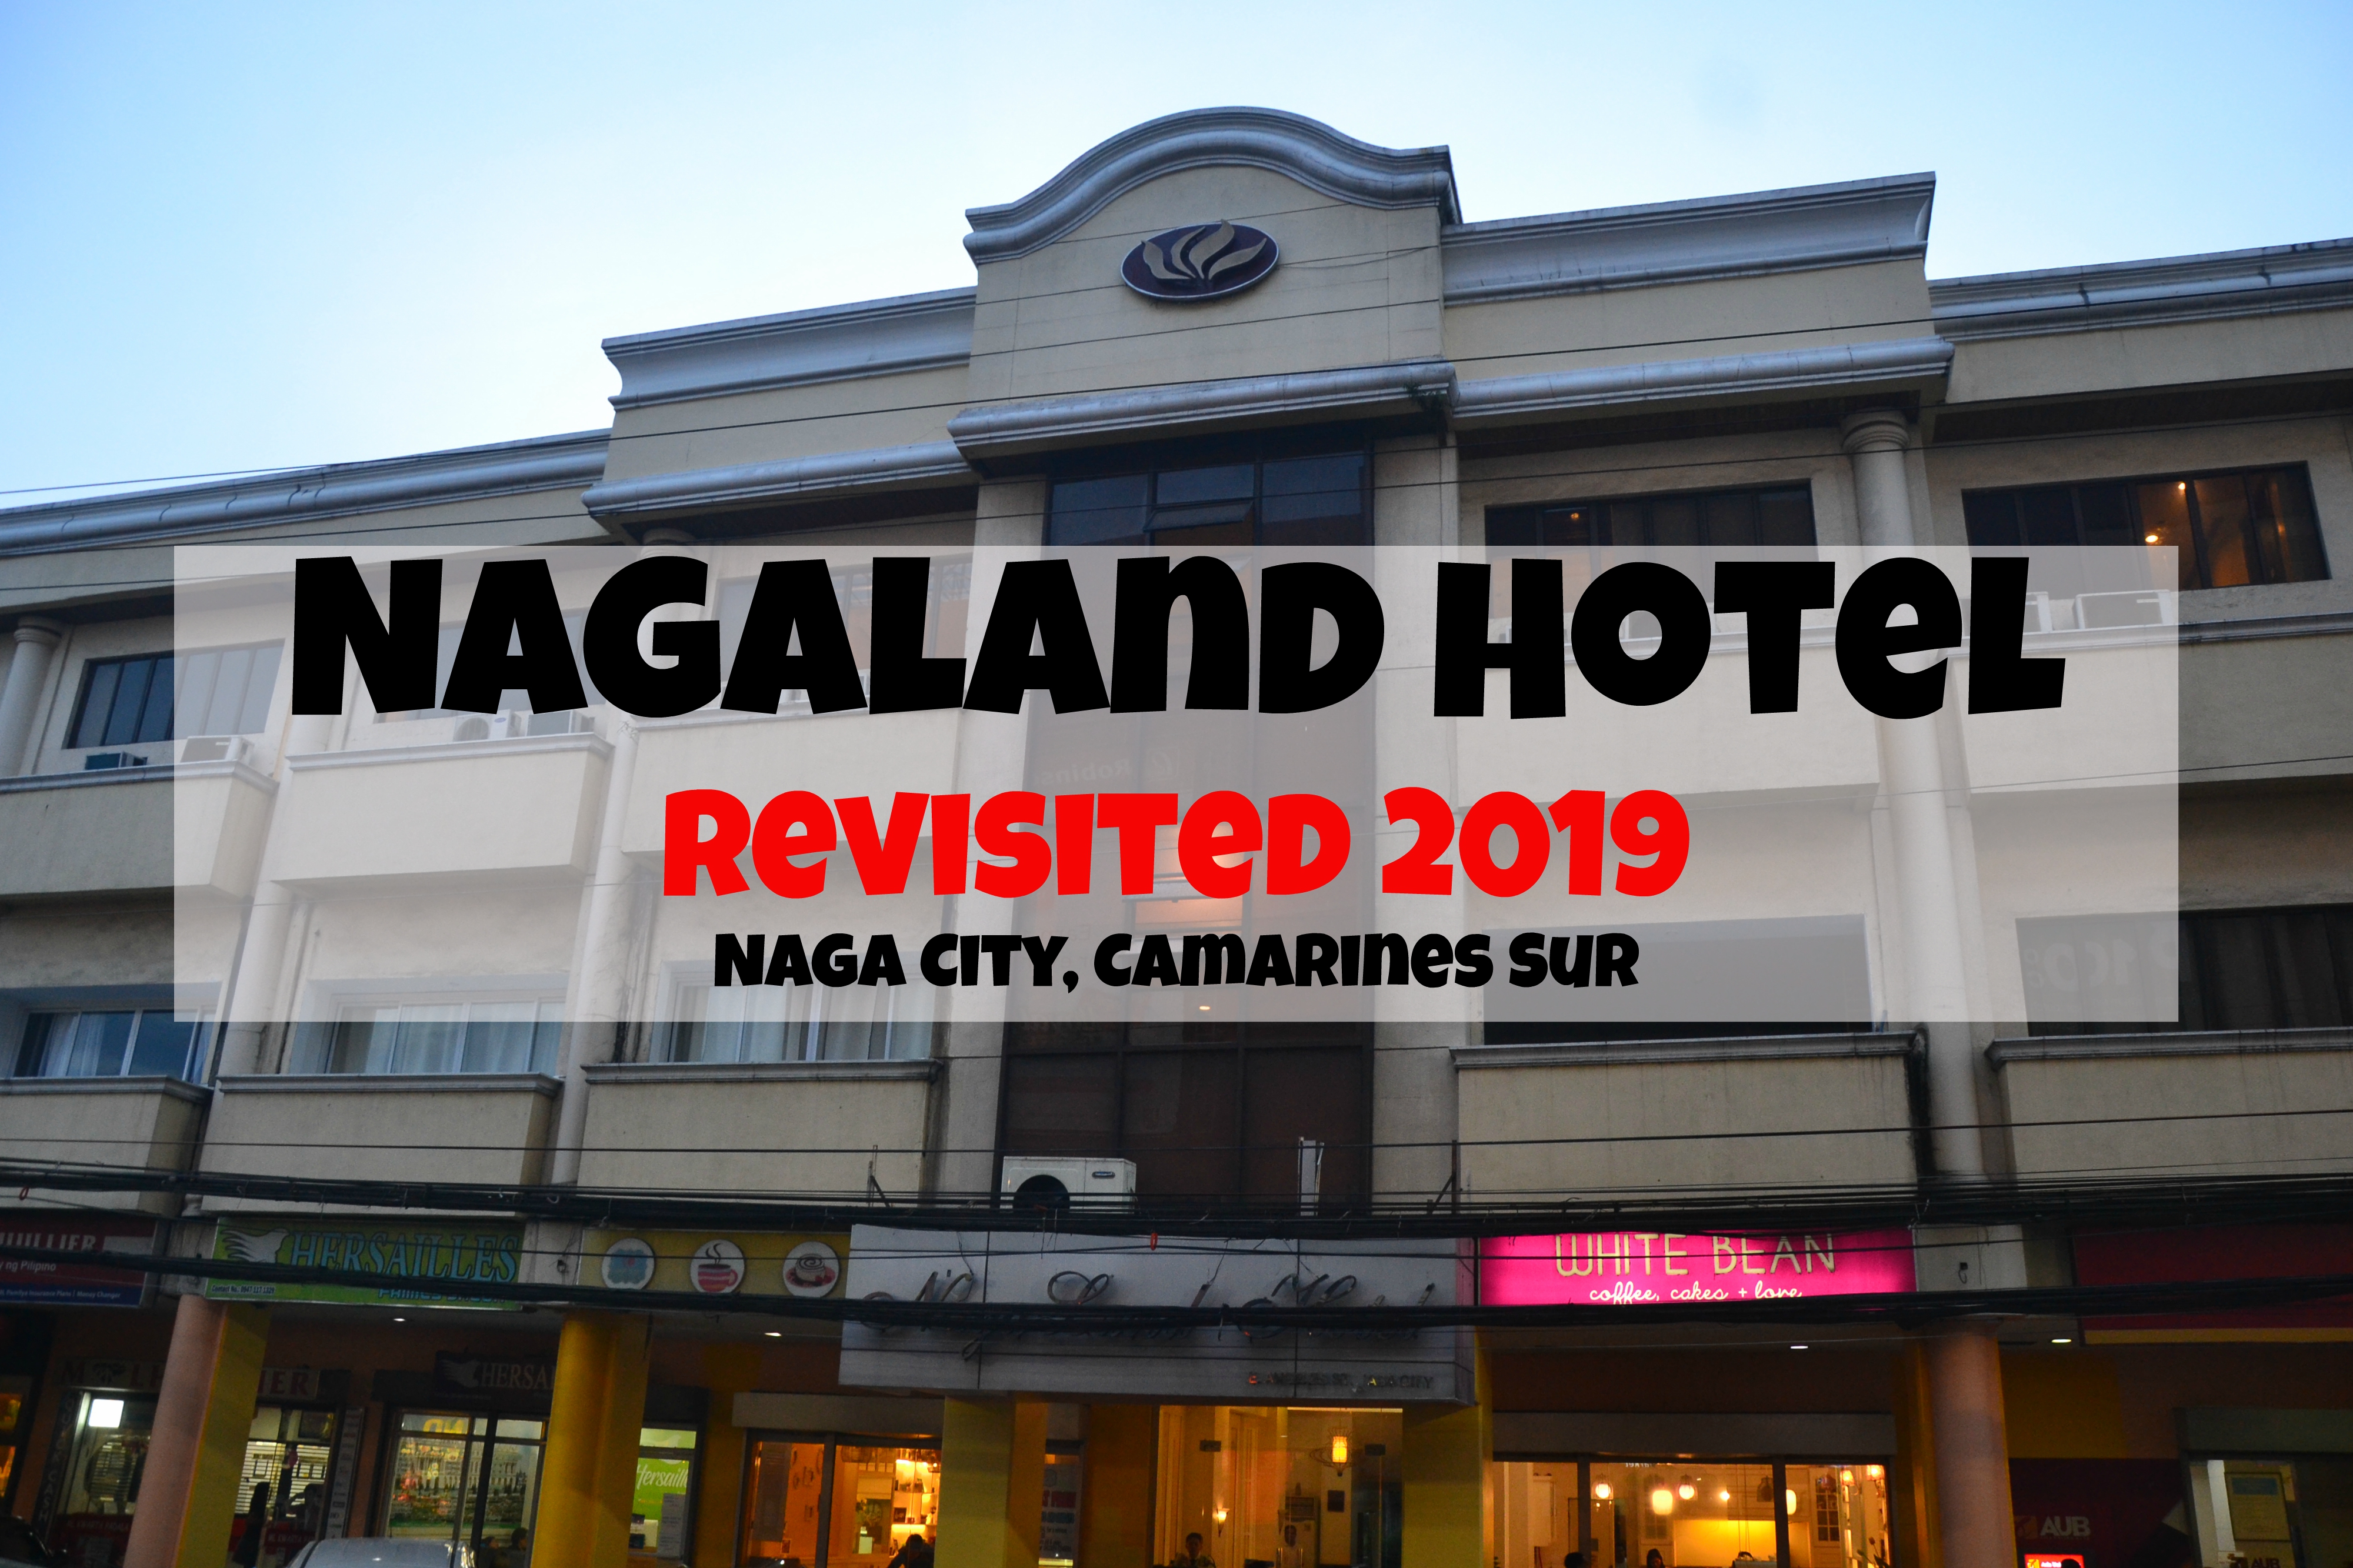 Nagaland Hotel Revisited  Camarines Sur - Nagaland Hotel Restaurant